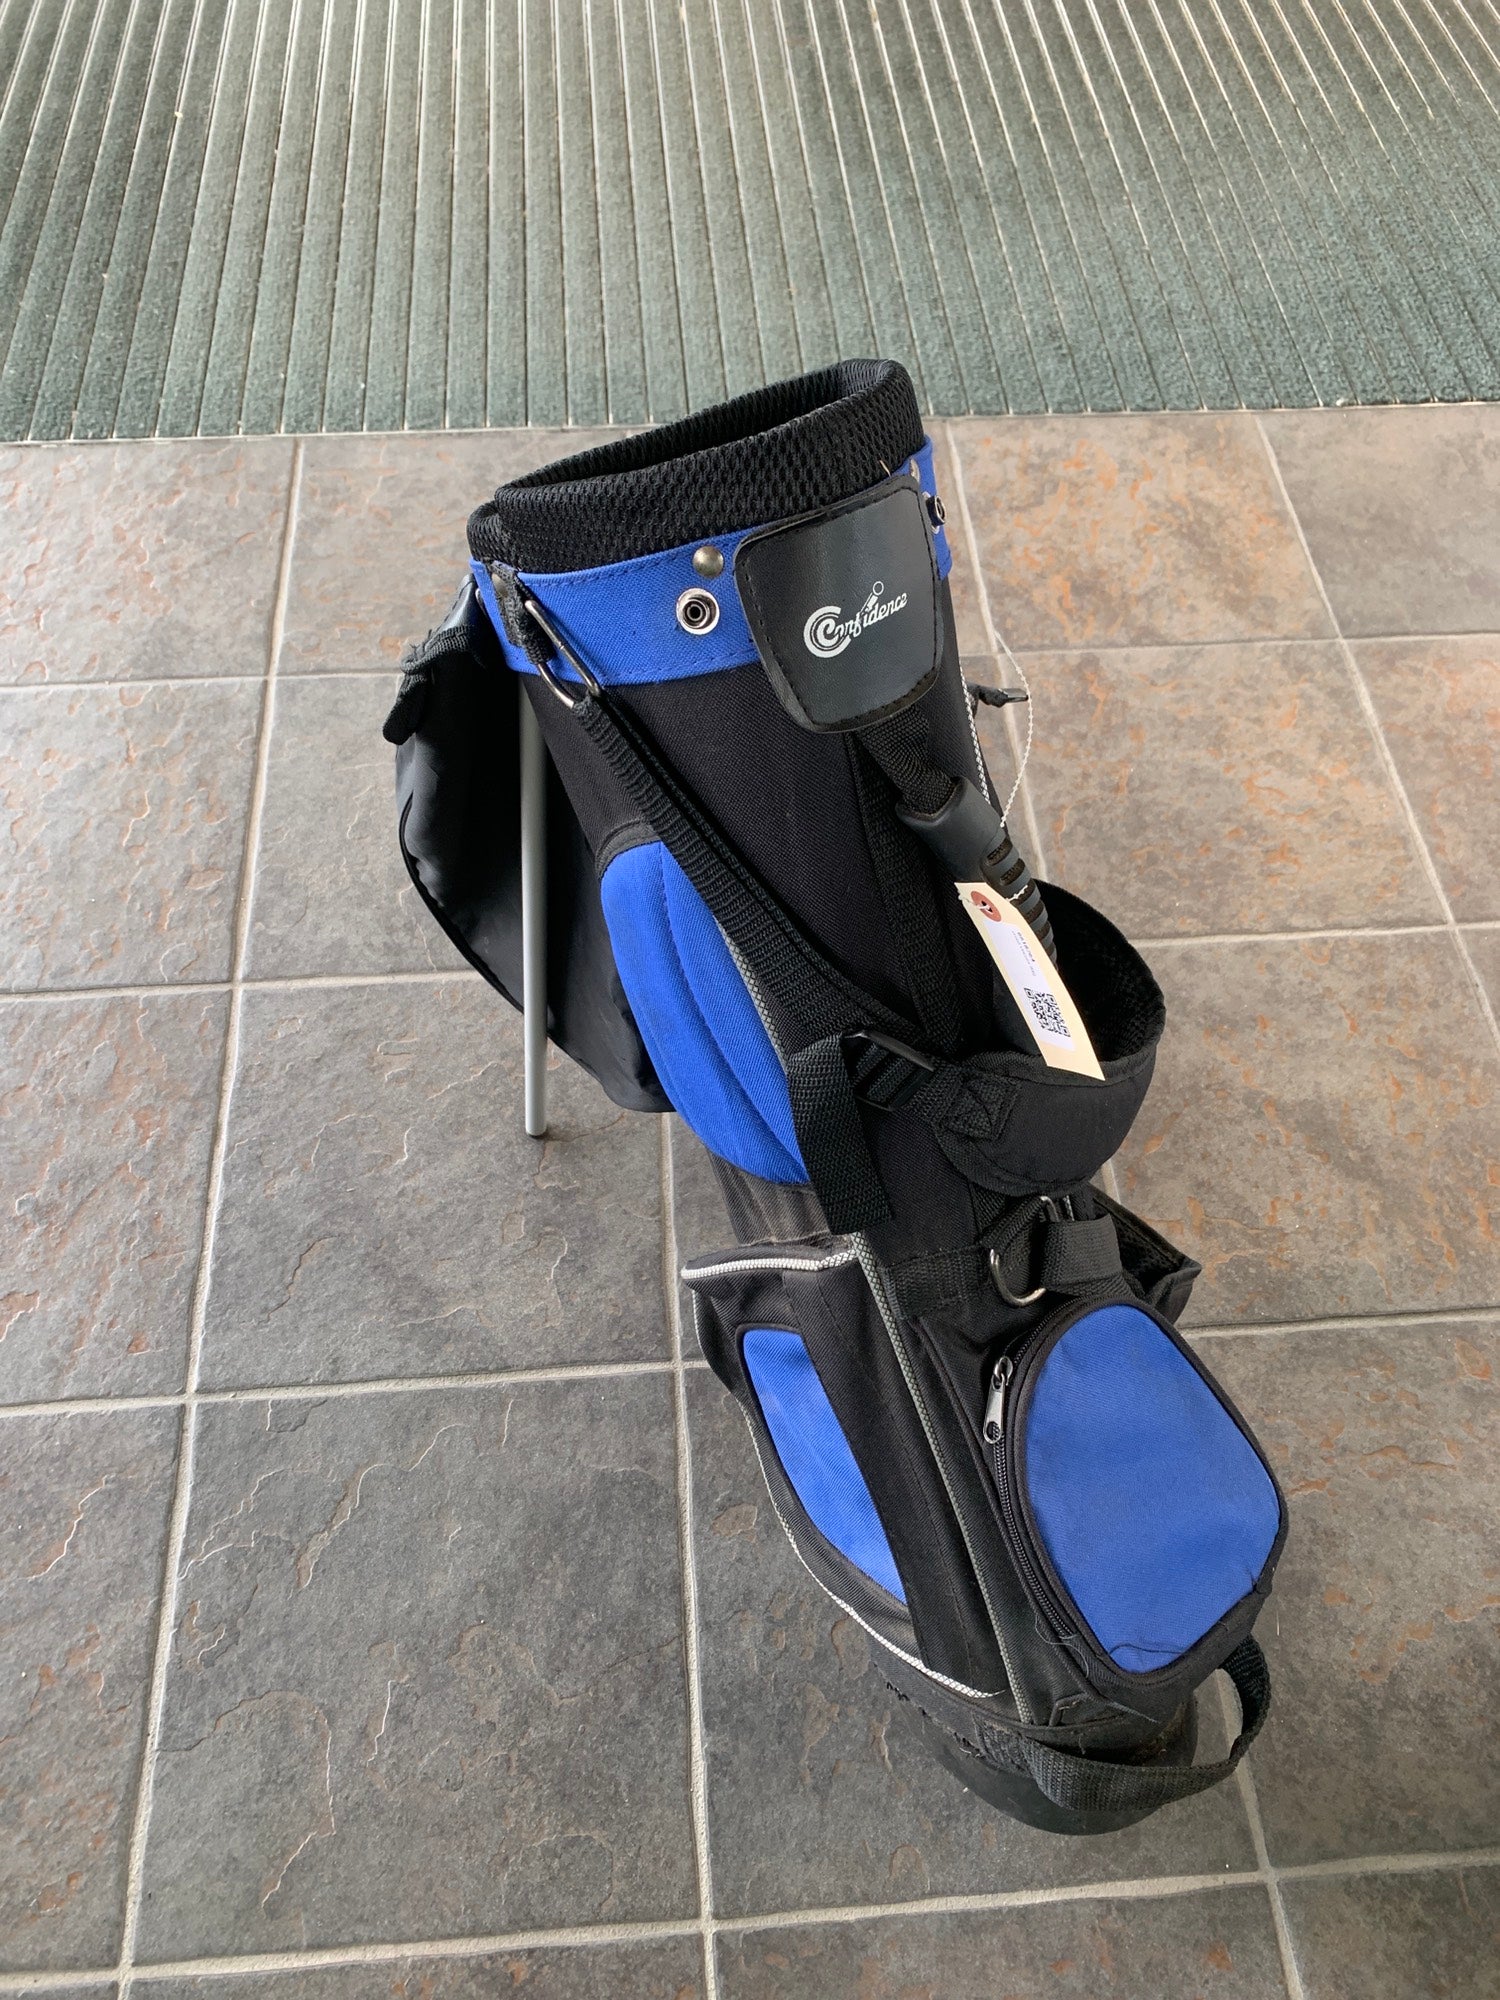 TS566 Stand Bag 34 inch BlackWhite Bag  US Kids Golf